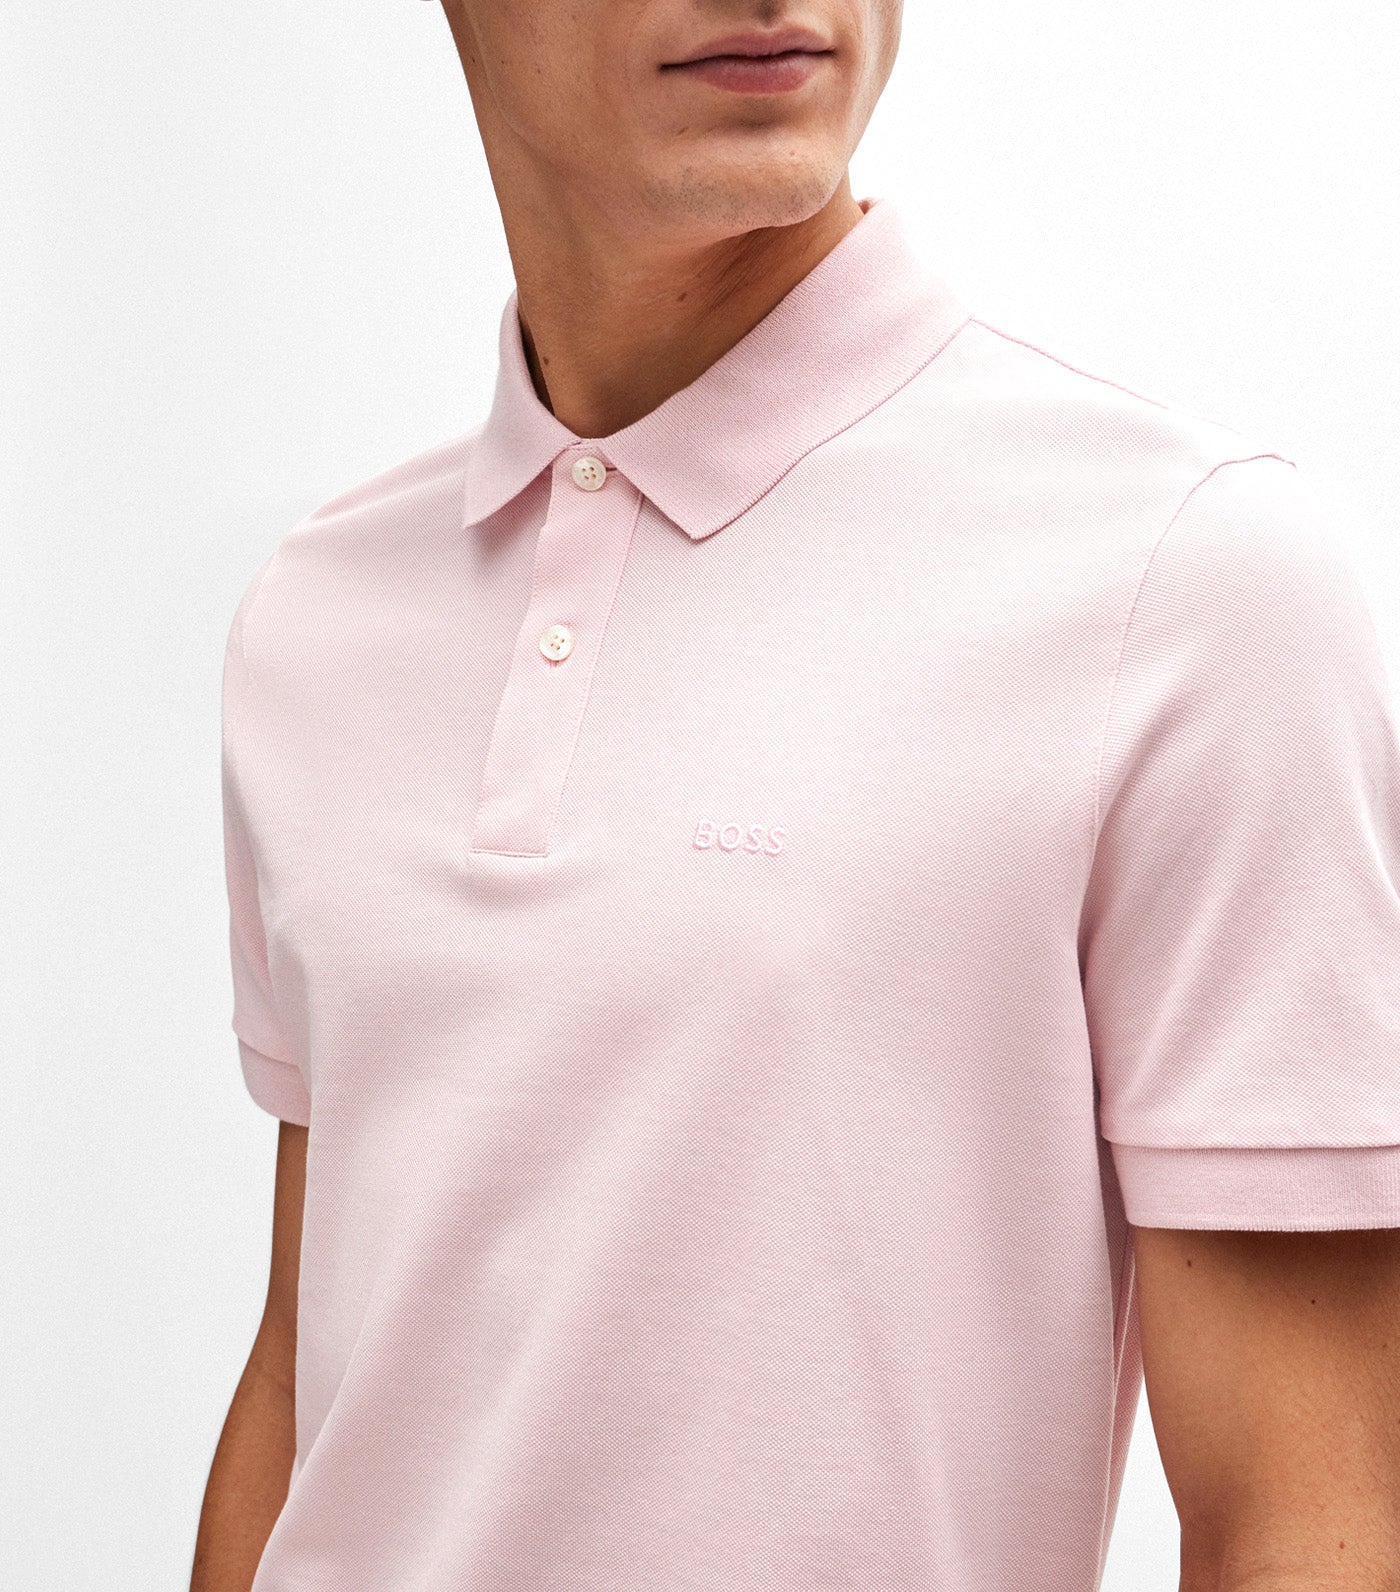 Pallas 41531 Polo Shirt Light Pink